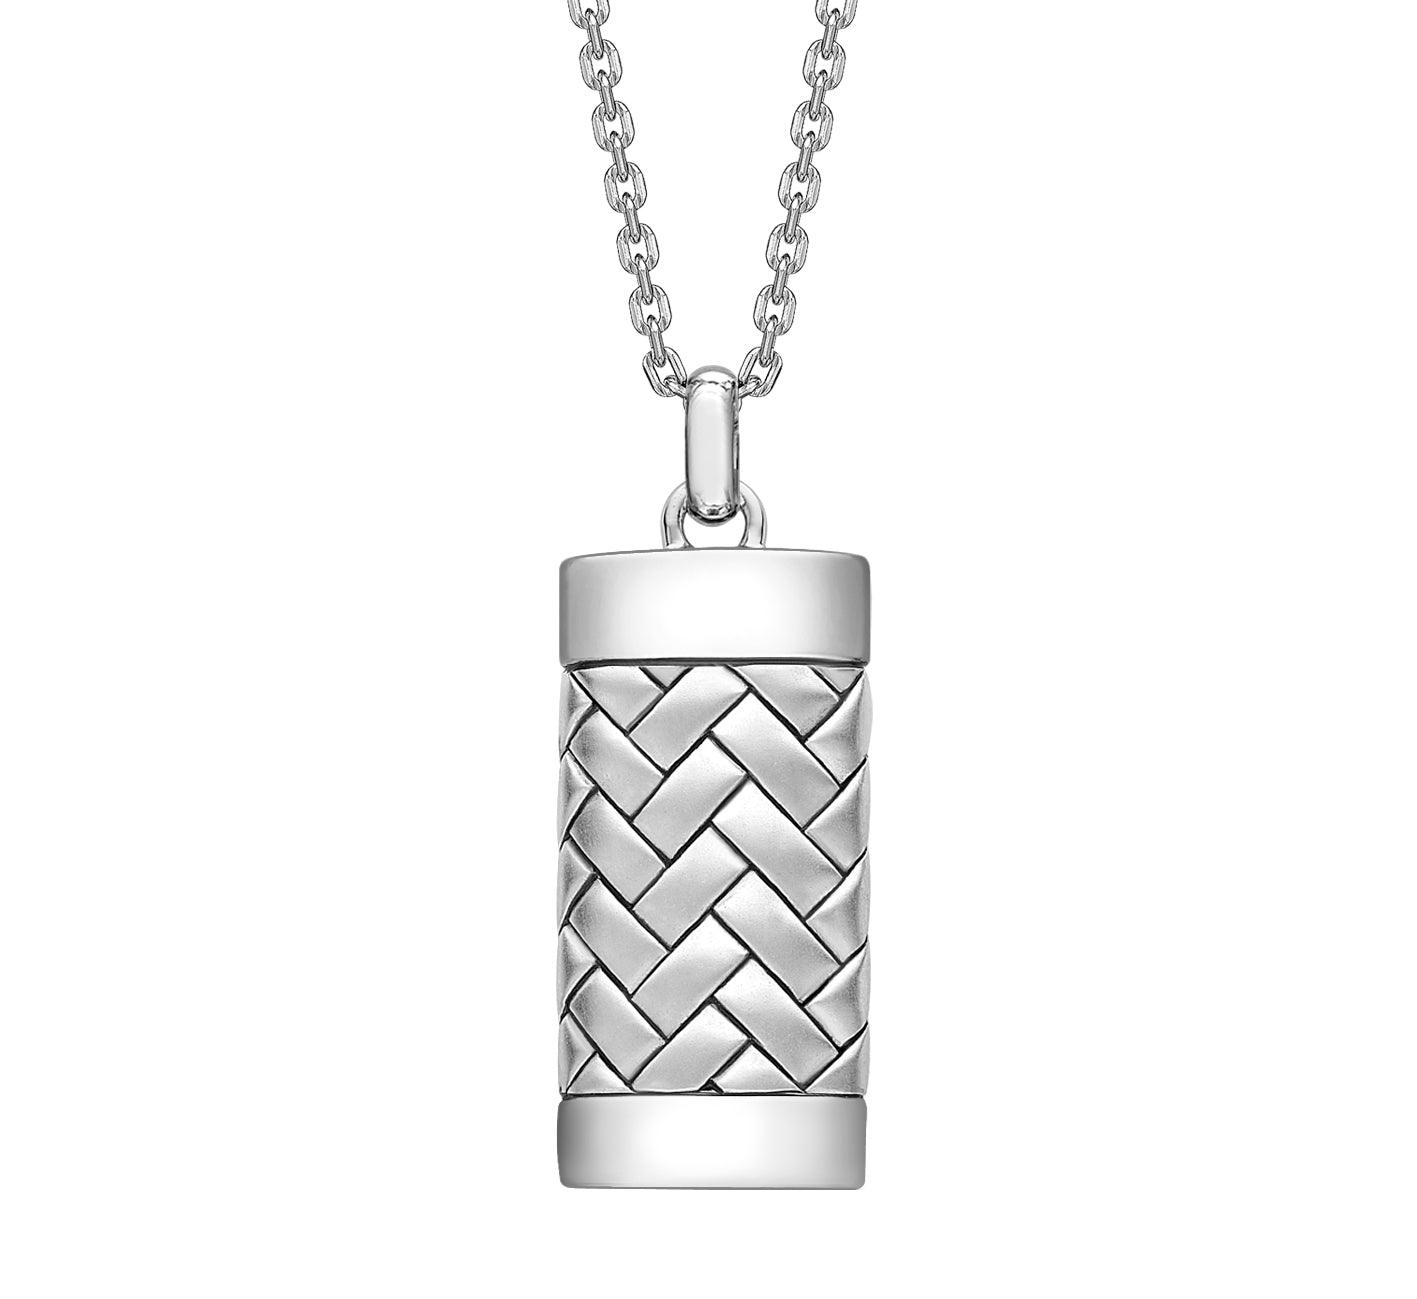 Buy 925 Silver Necklaces/Pendants - Theodore Designs Melbourne | Australia's Premier Shopping Destination 